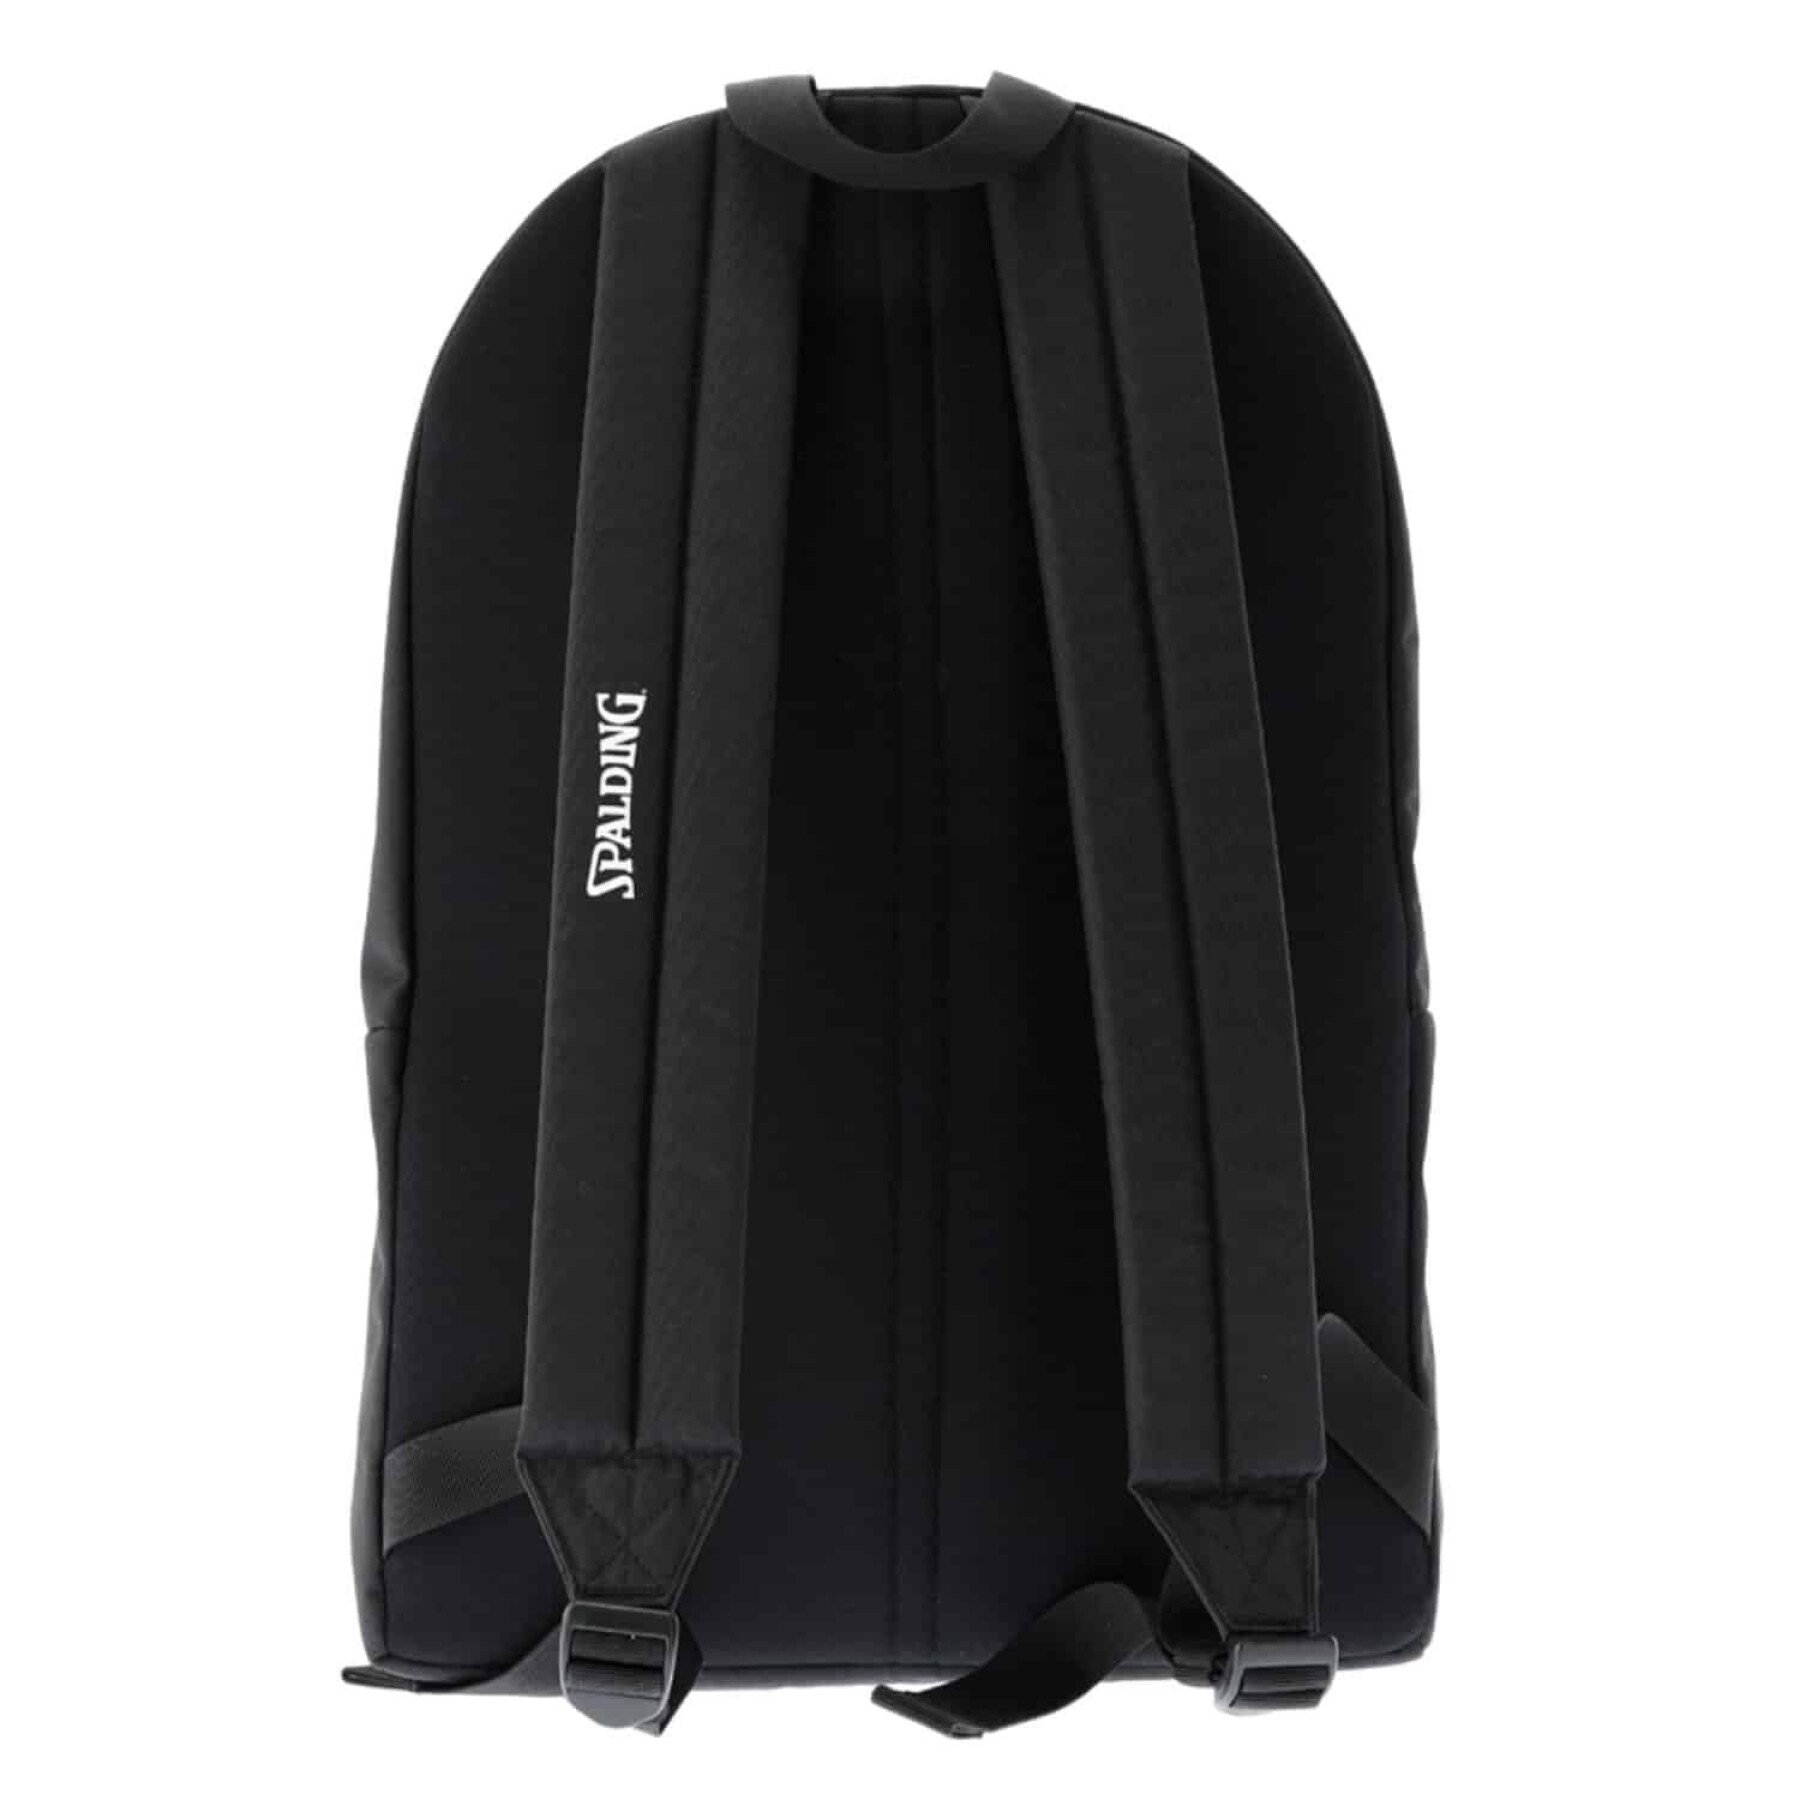 Backpack Spalding Essential